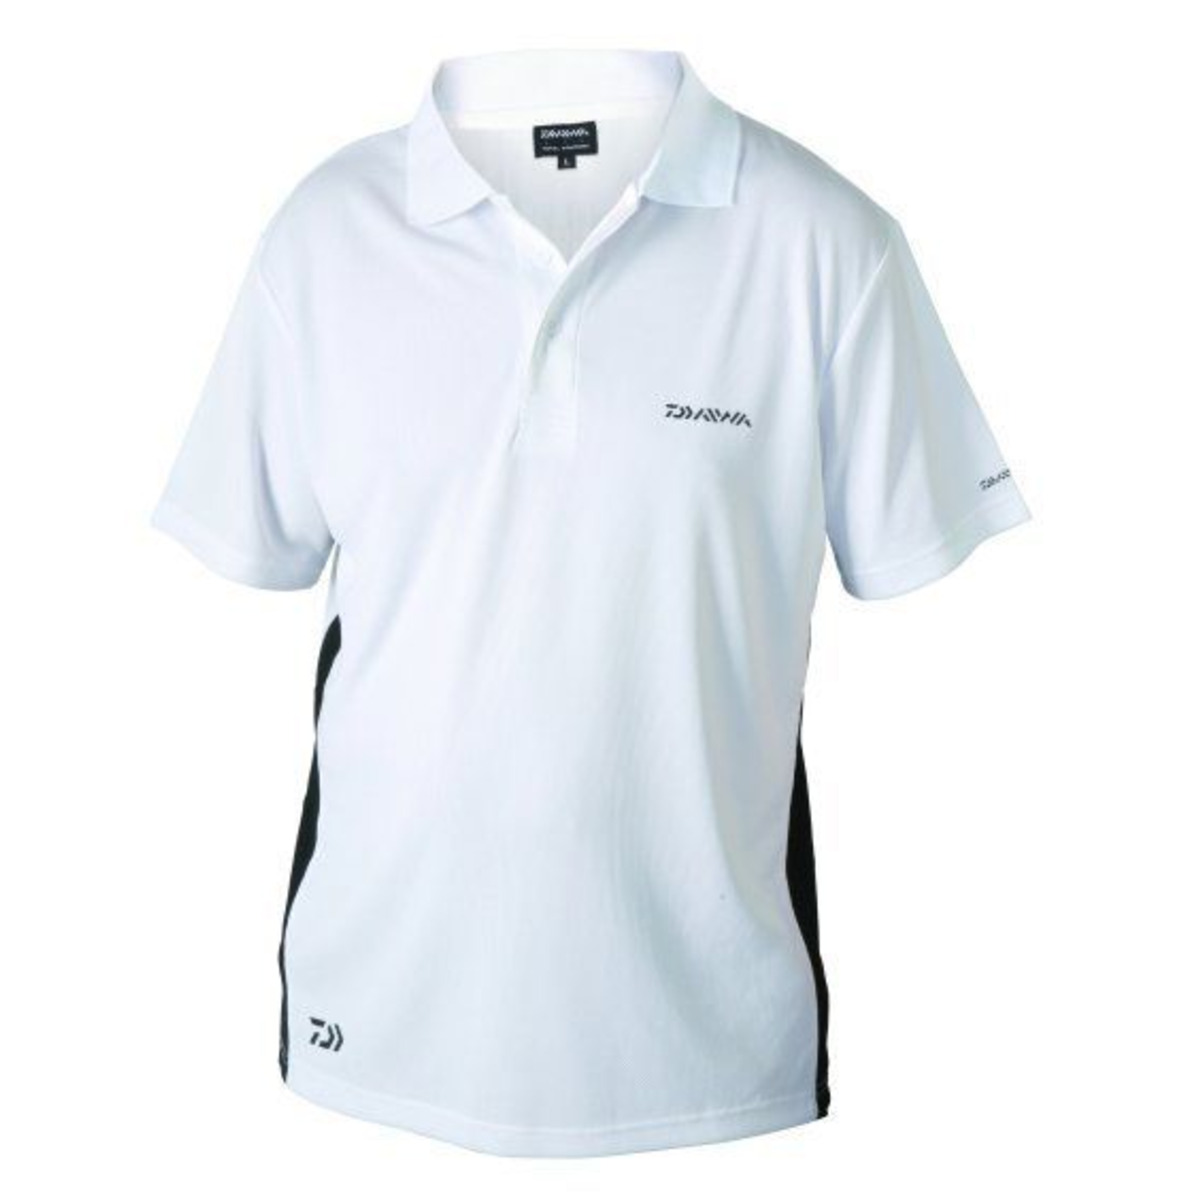 Daiwa Polo Shirt - M -  White         